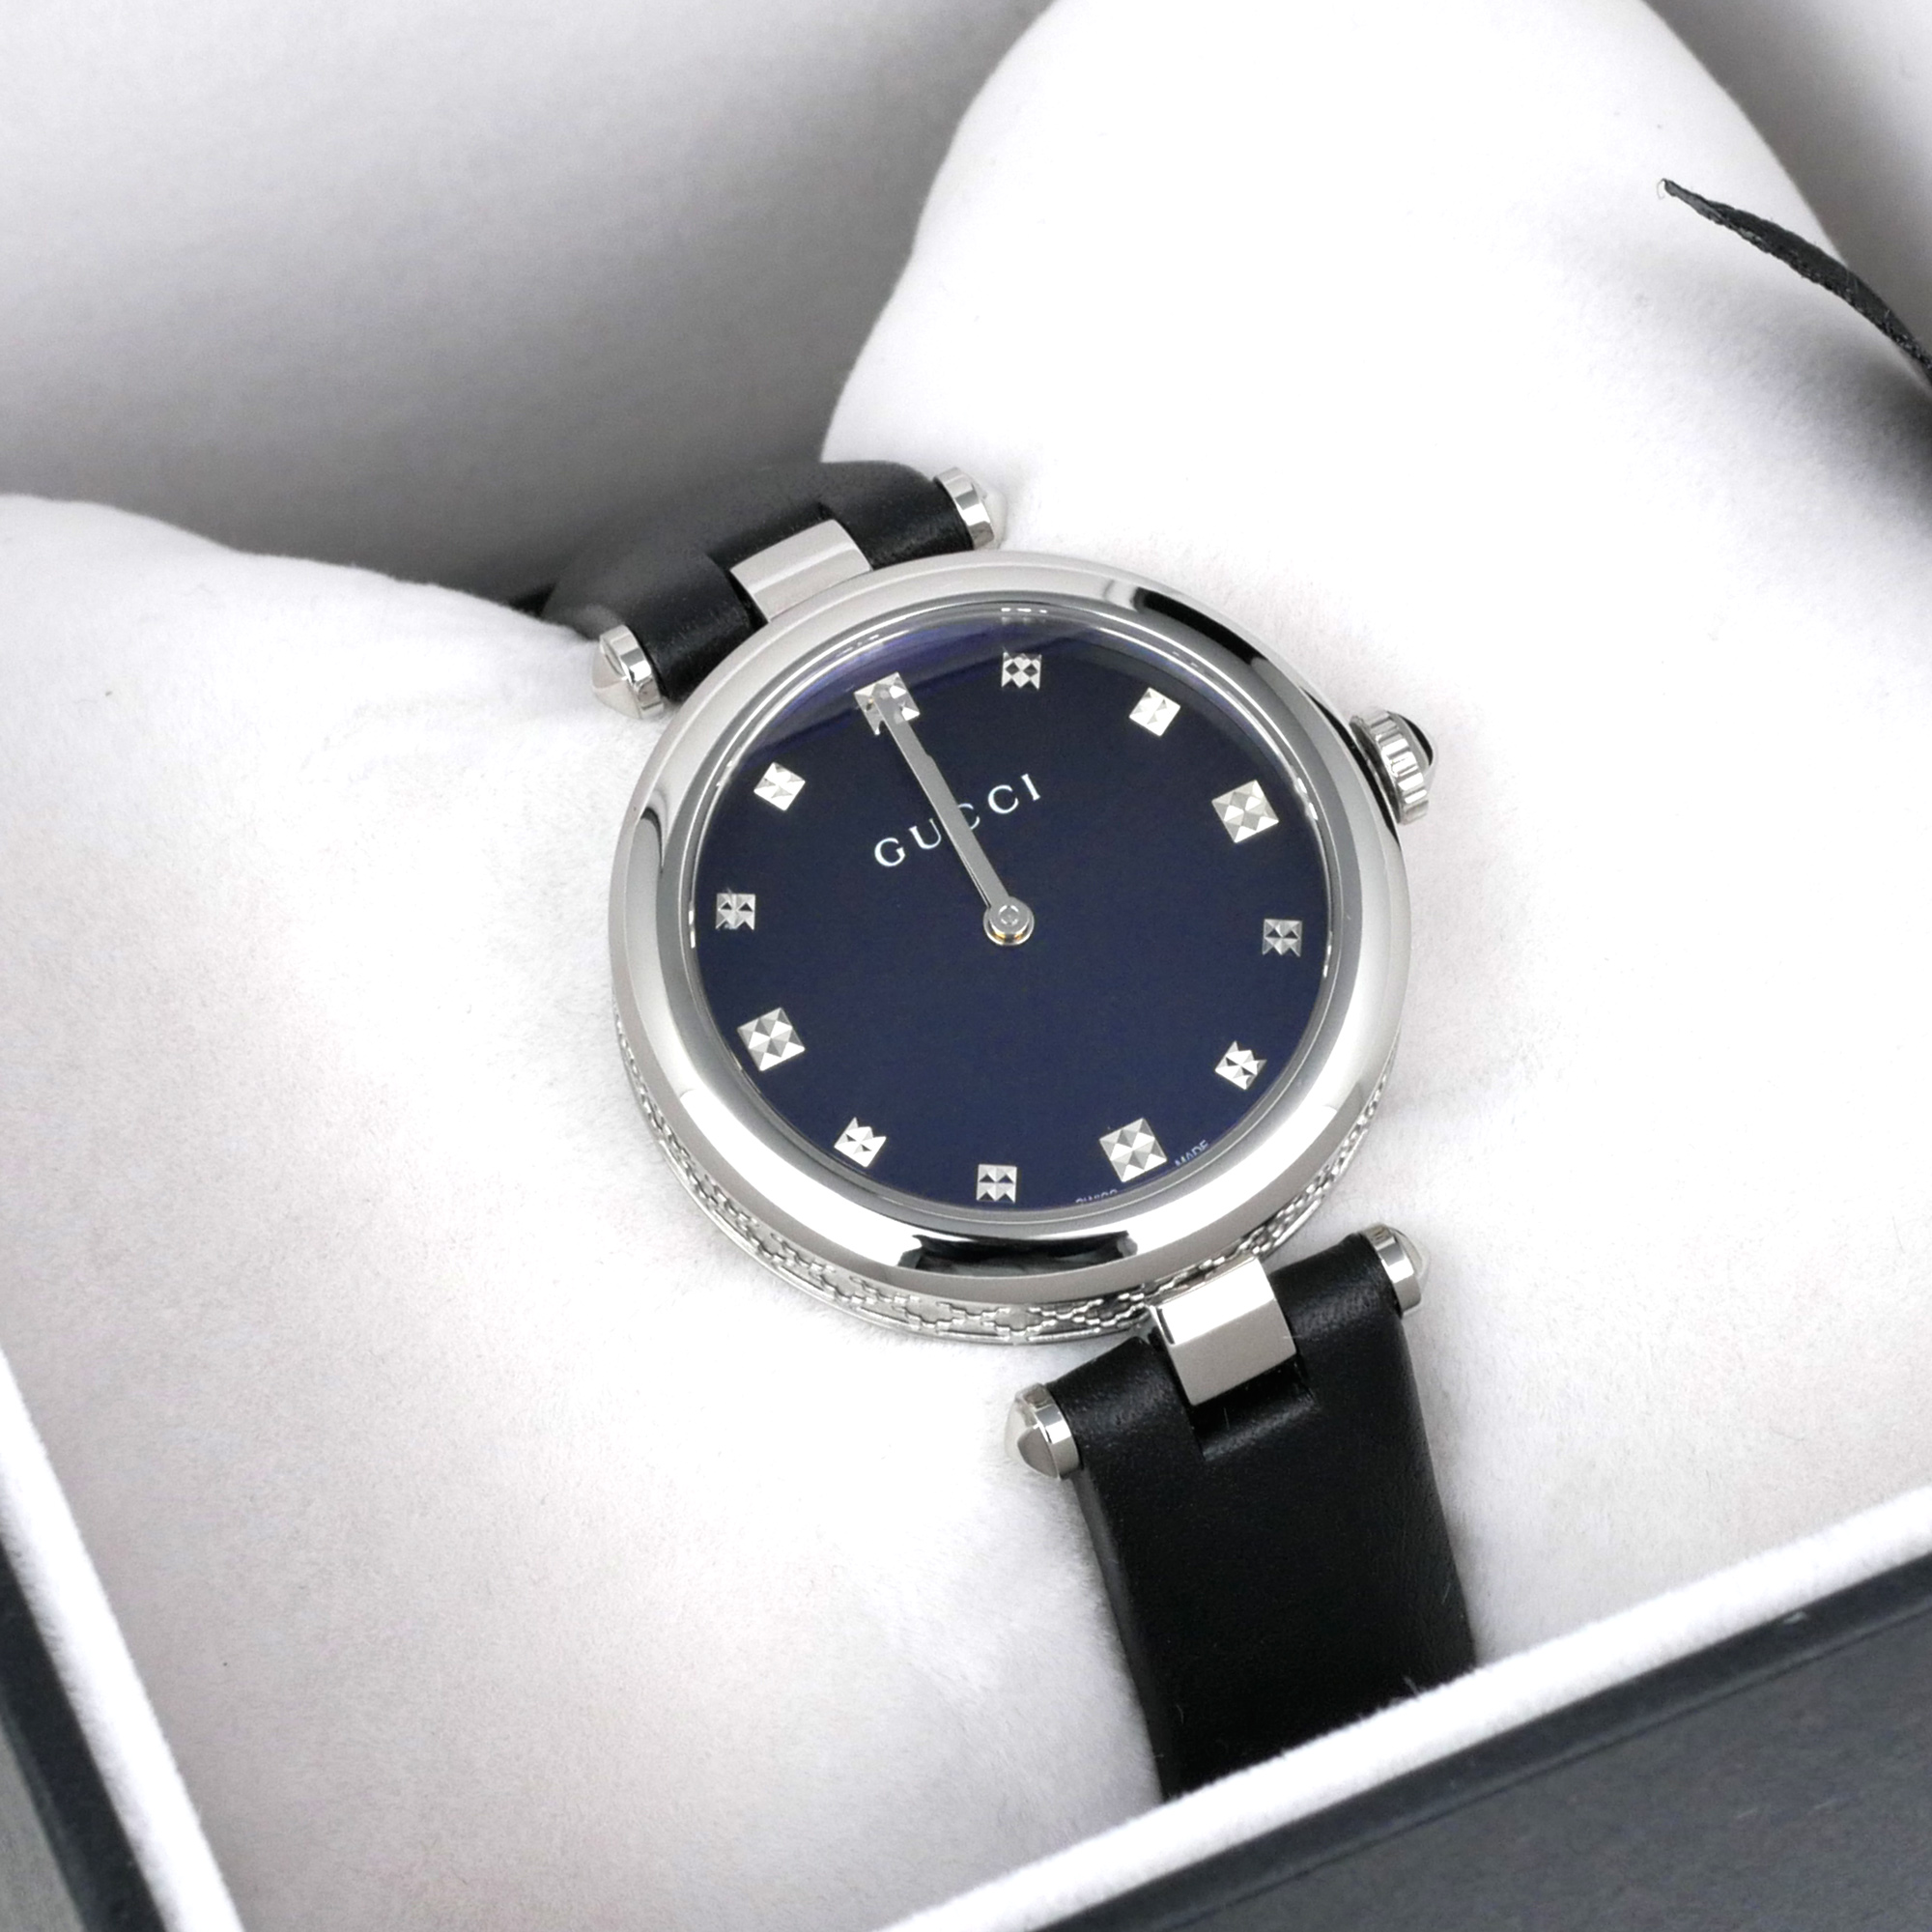 GUCCI Diamantissima Black Dial Ladies Luxury Swiss Designer Watch YA141403